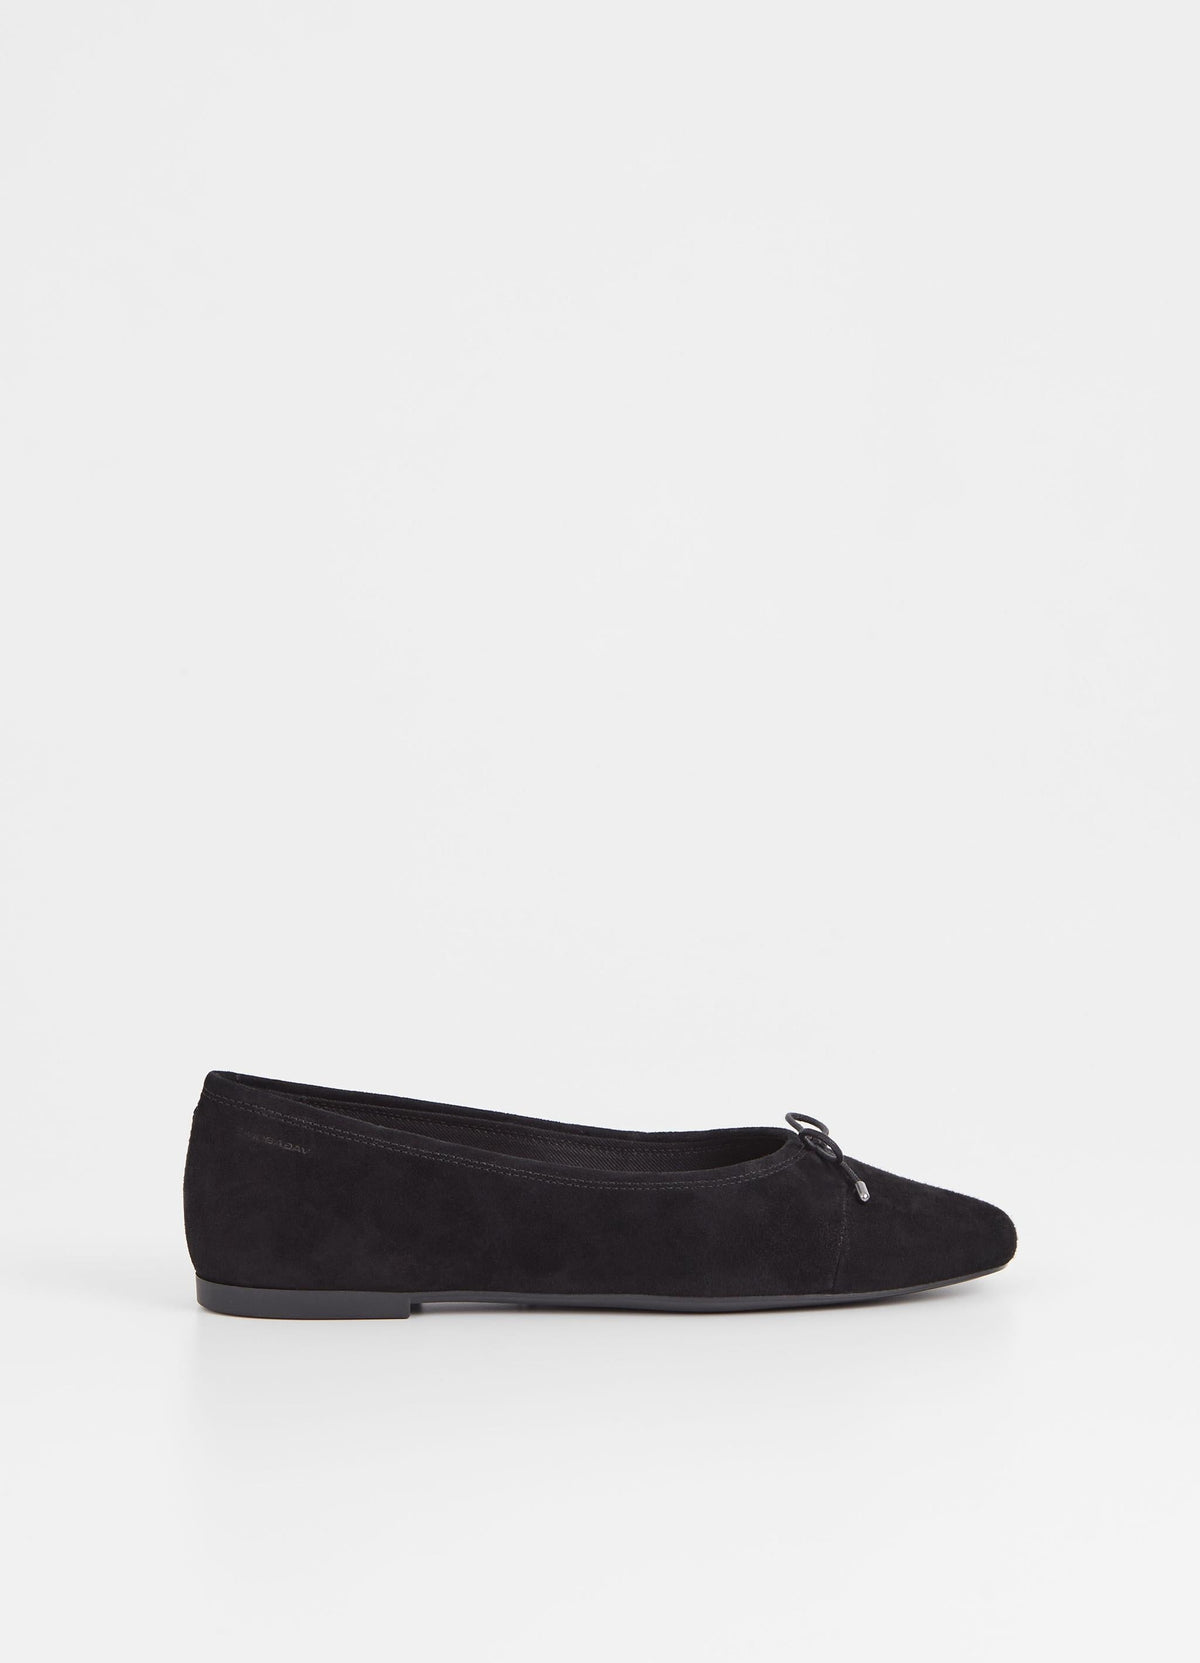 Suede black ballet shoes